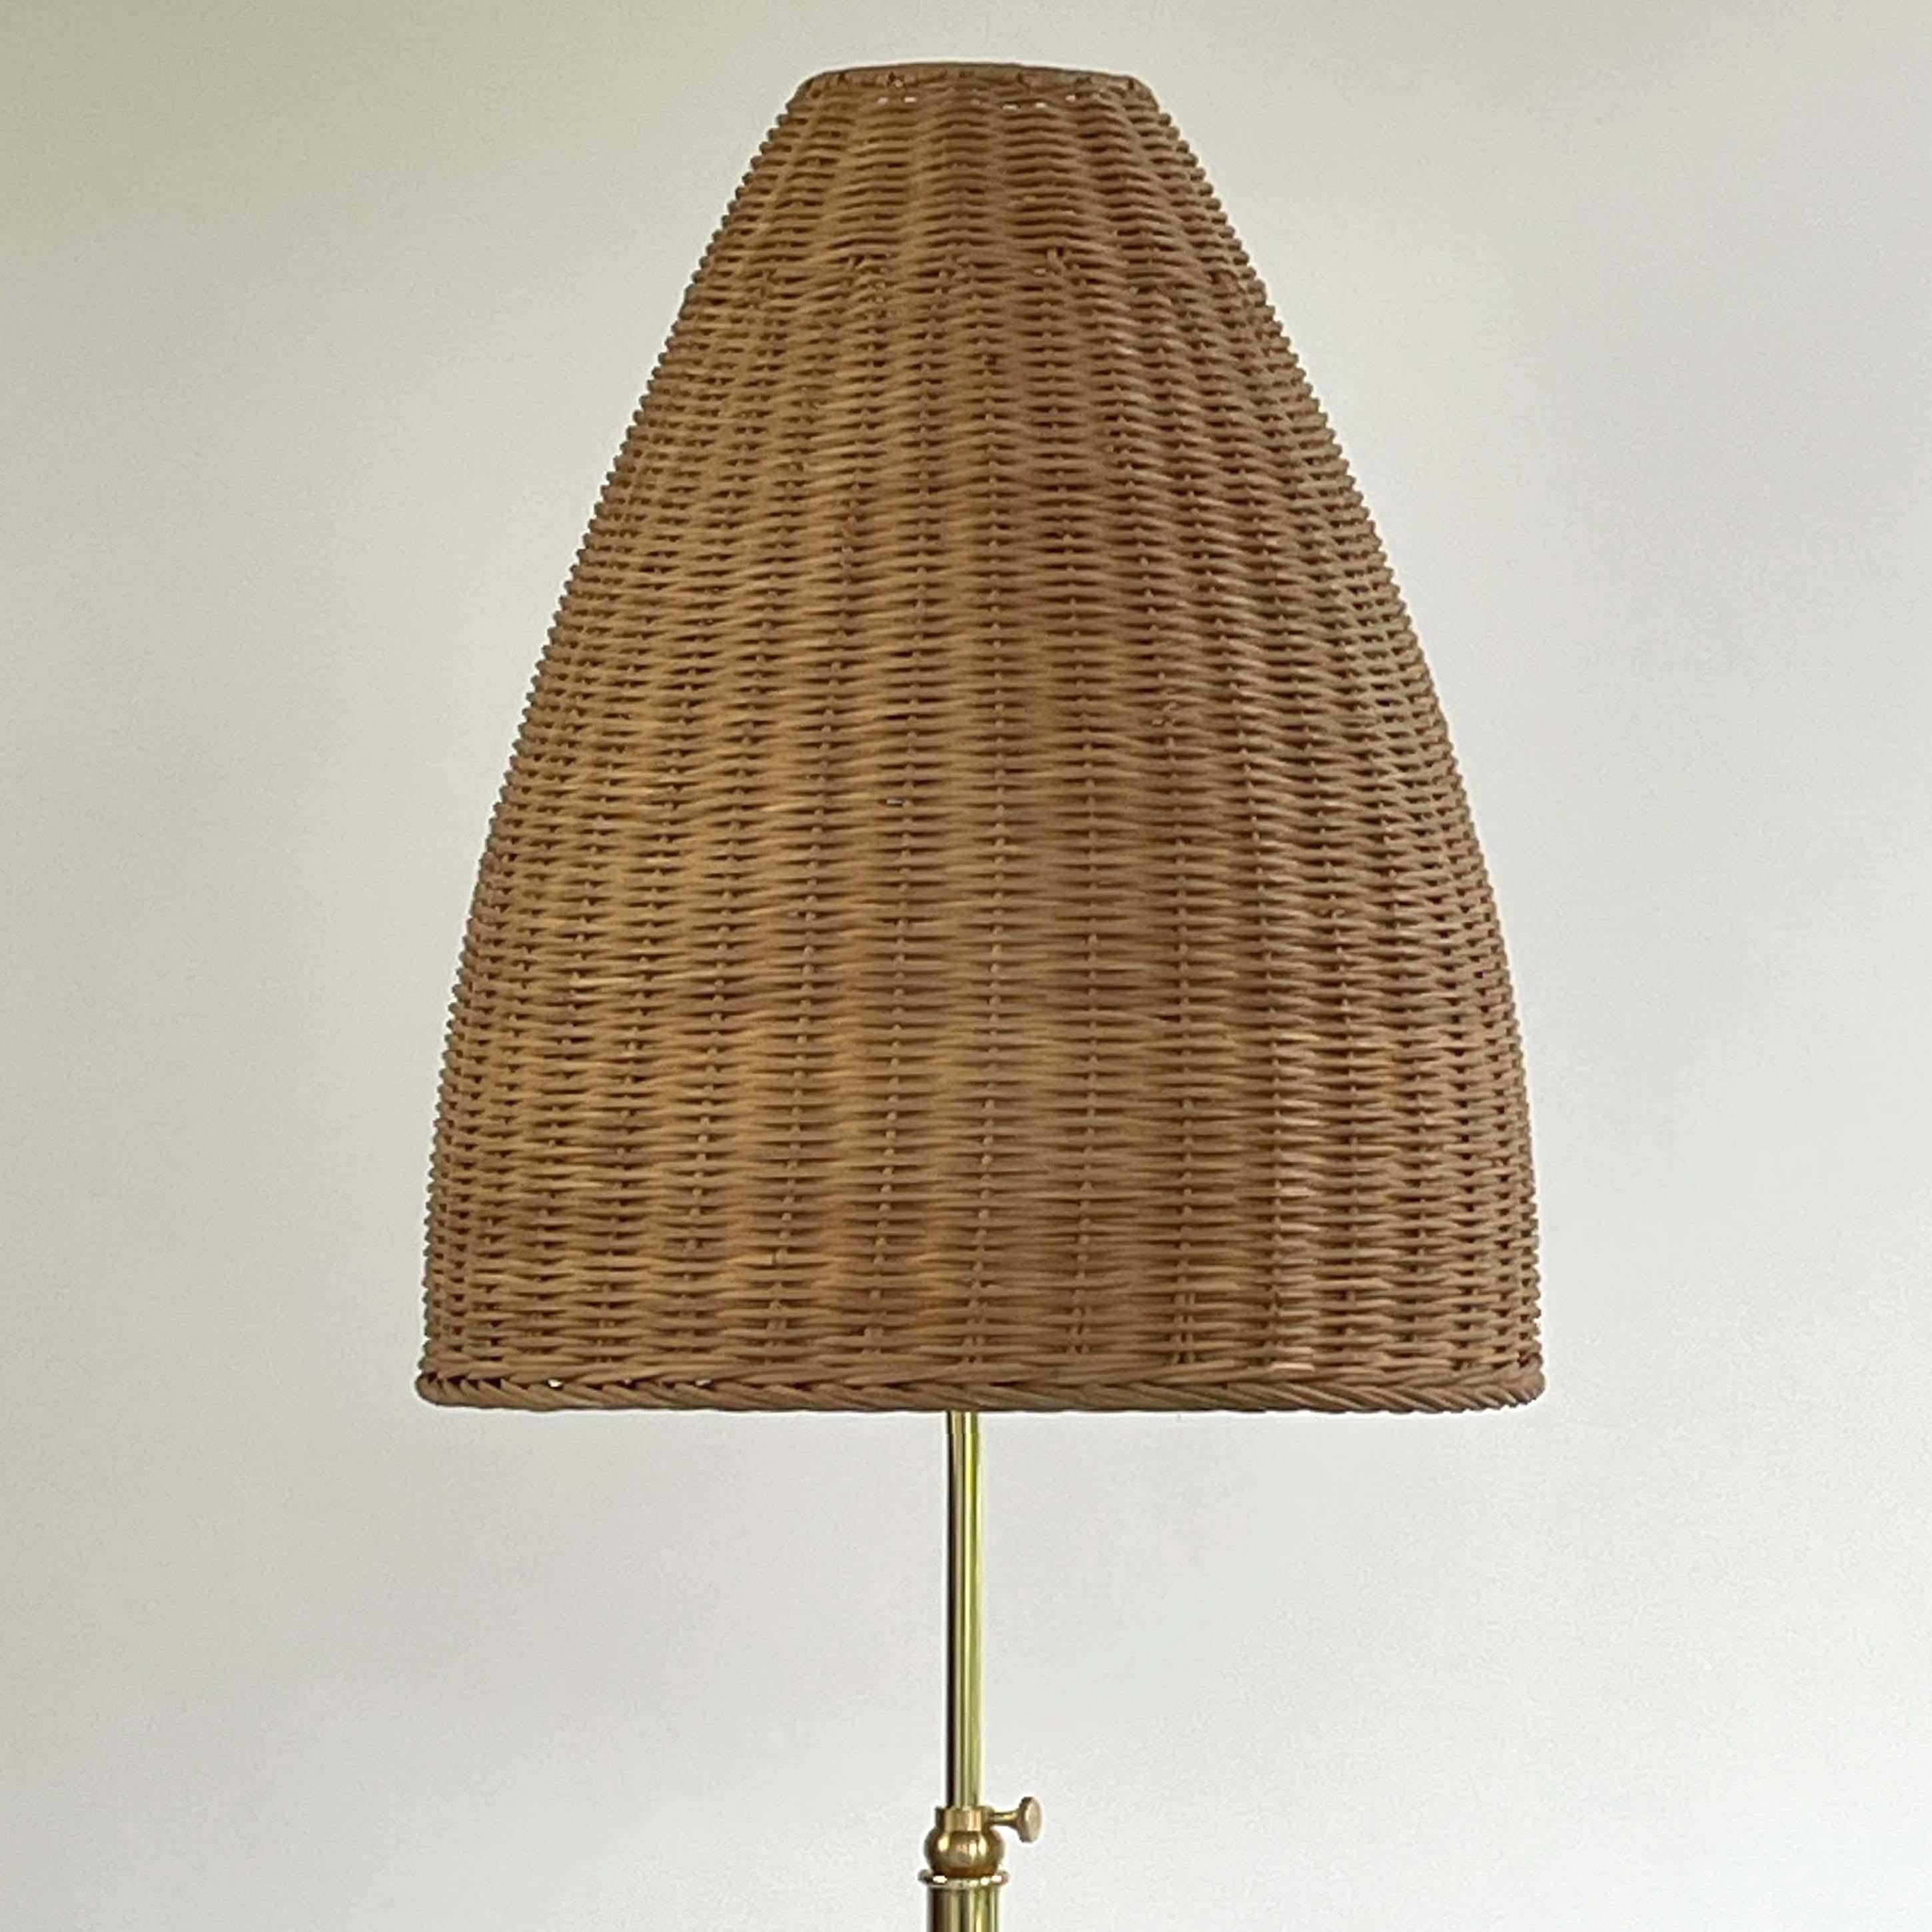 Adjustable 'Bienenkorb' Wicker Brass Floor Lamp, Jt Kalmar Style, Austria 1950s For Sale 1